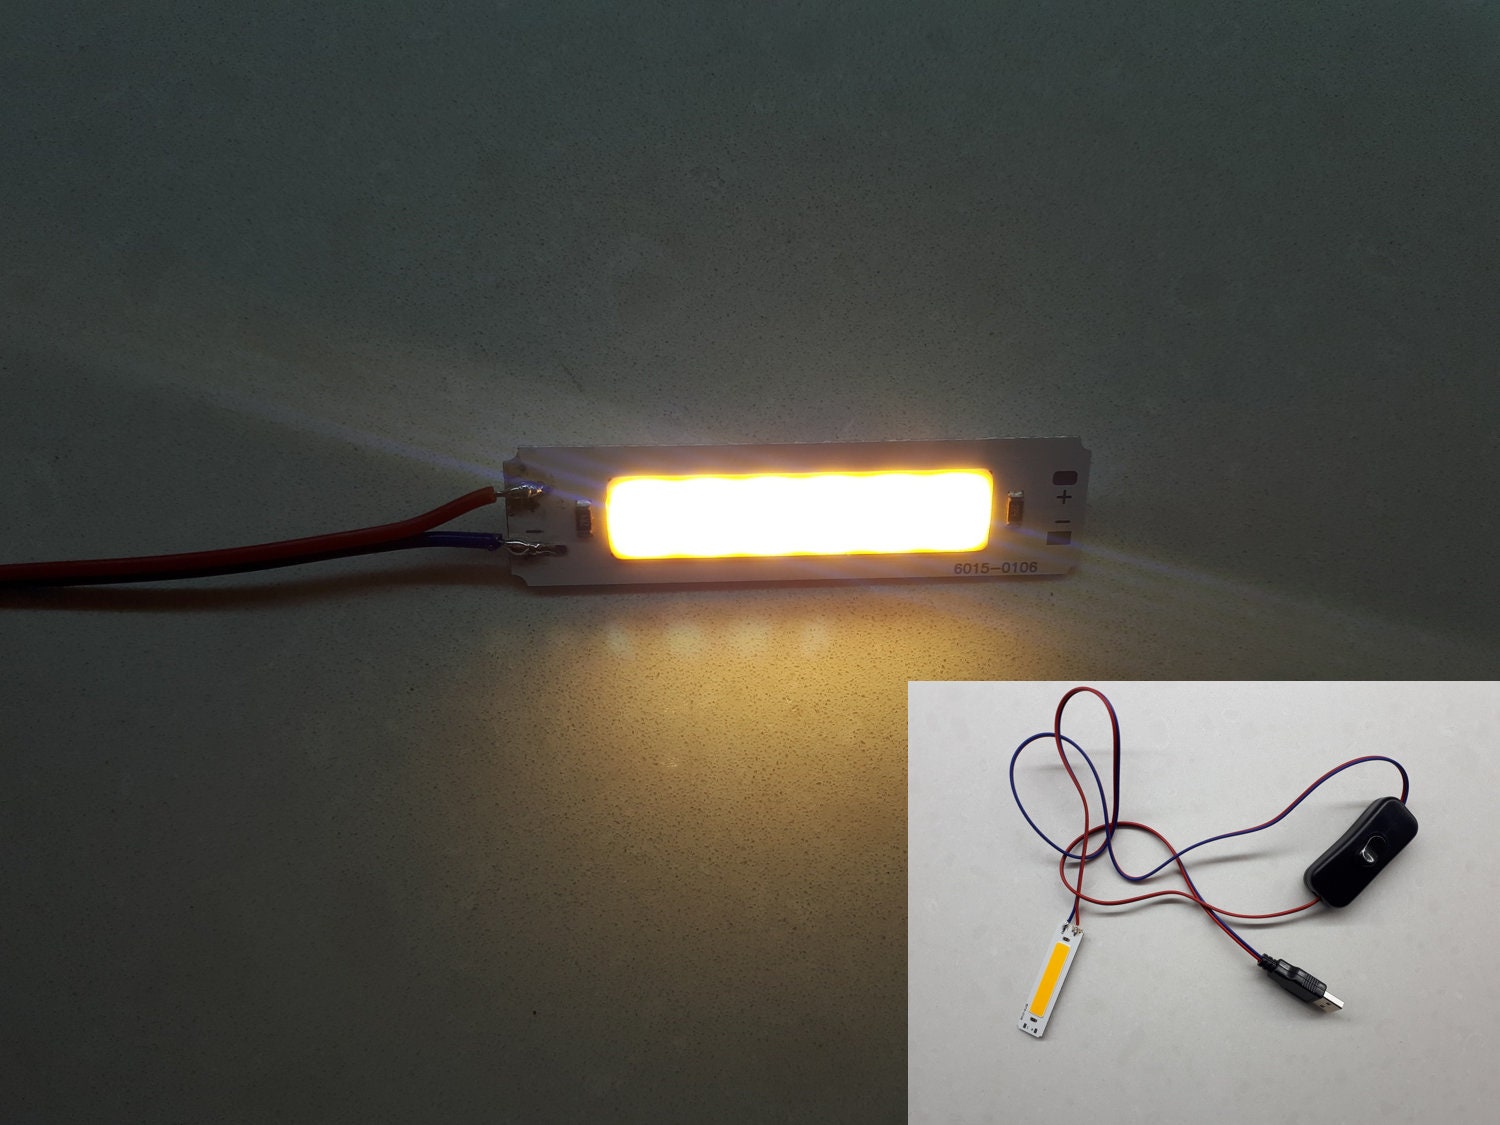 Warmweiße LED 2W USB 5V, DIY-Beleuchtung, Led Cob, Starkes Led-Licht, LED-Lampe,  Beleuchtungsschilder, Kaltweiße Beleuchtung, Schalter an aus, 1m Kabel -  .de